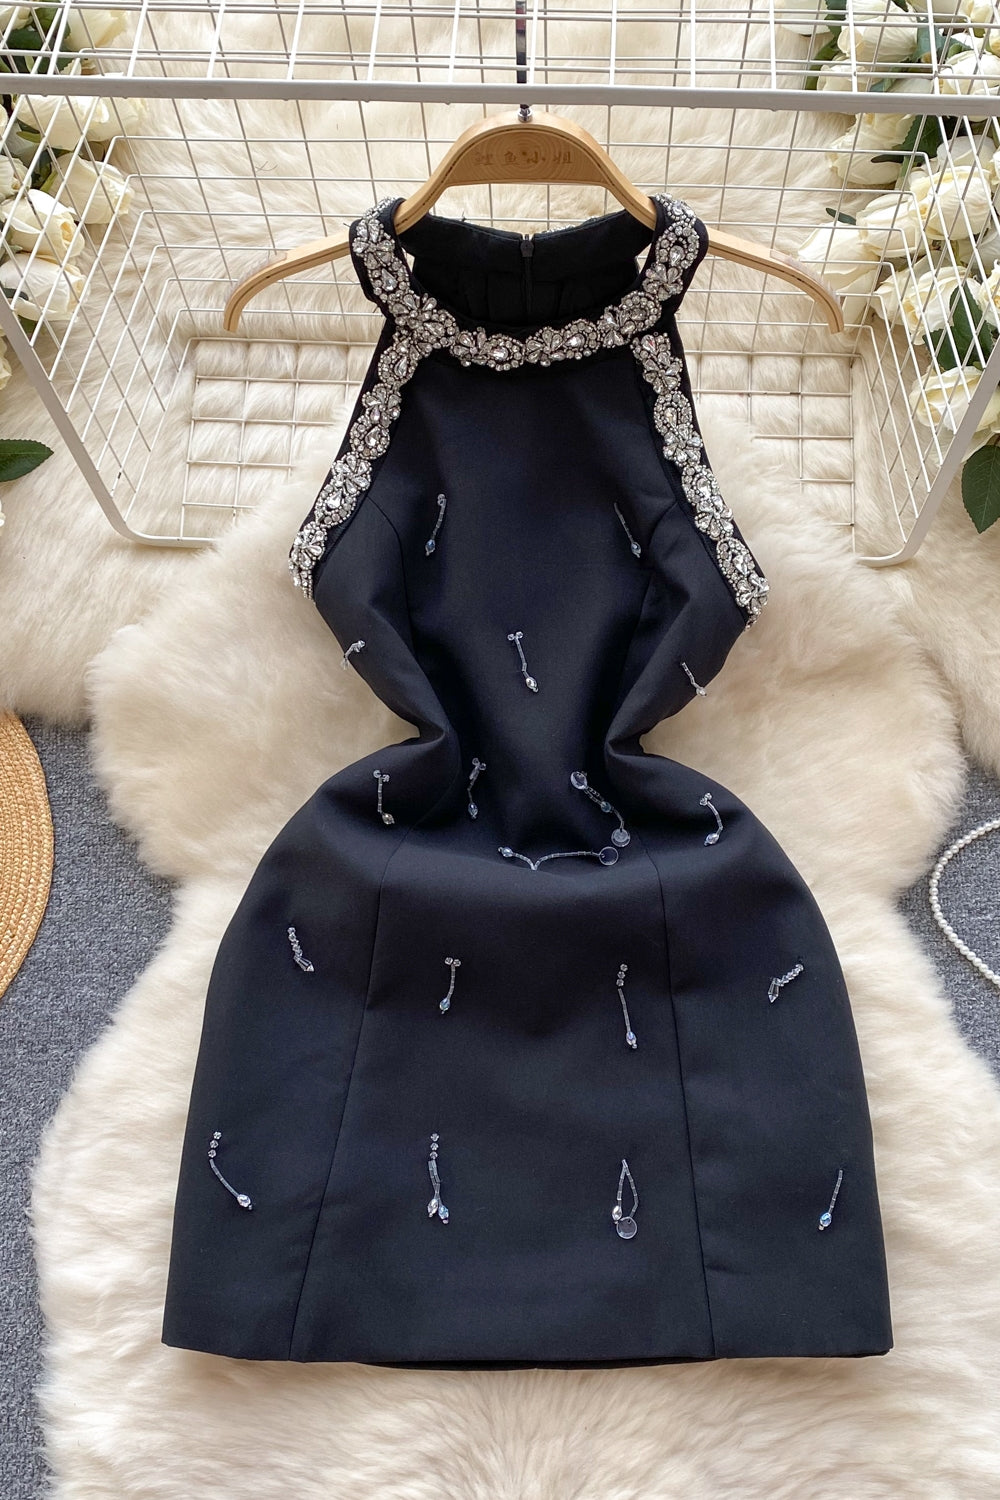 CM-DY095638 Women Elegant European Style Rhinestone Beading Sleeveless Mini Dress - Black